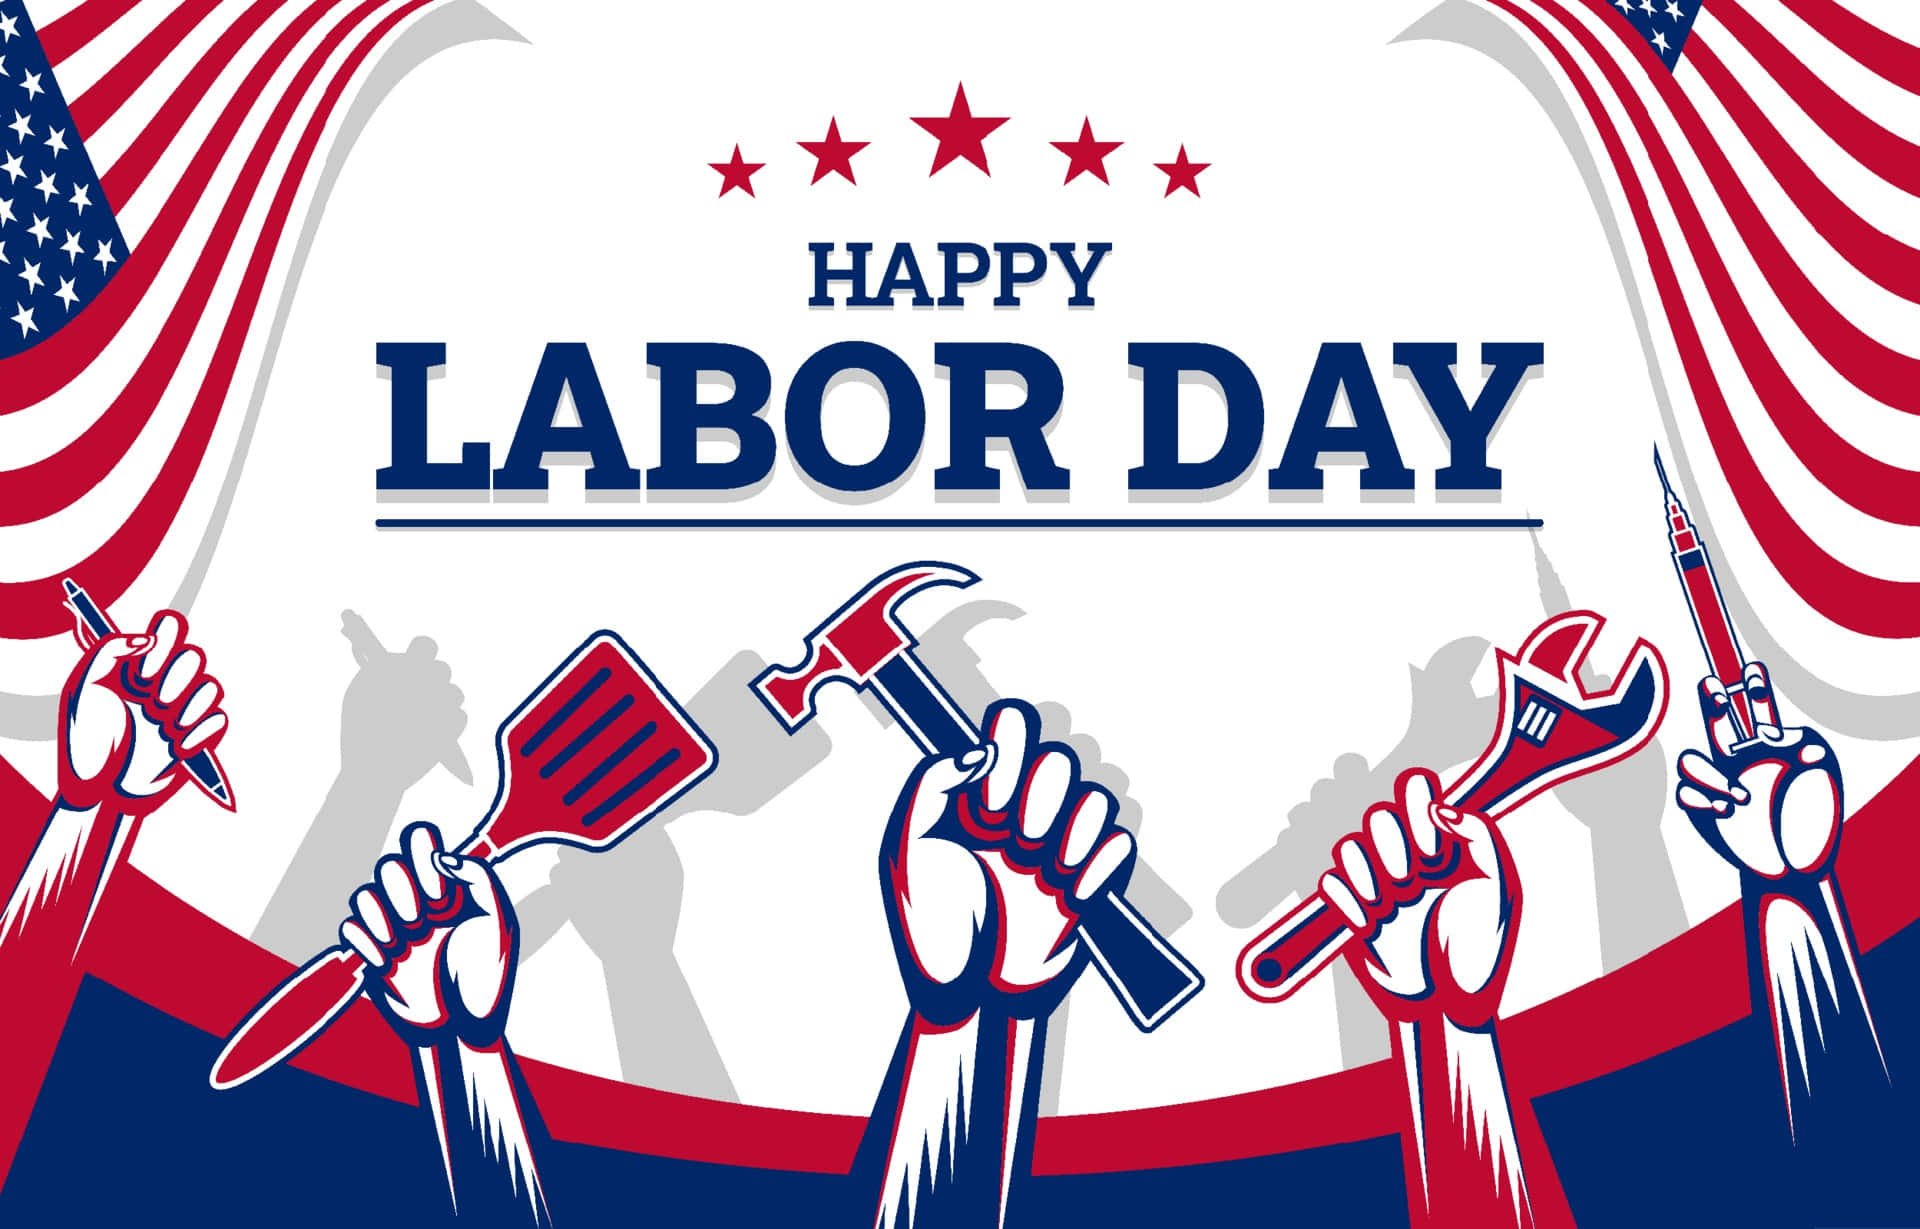 Celebrate Labor Day in the Spirit of Worker Appreciation